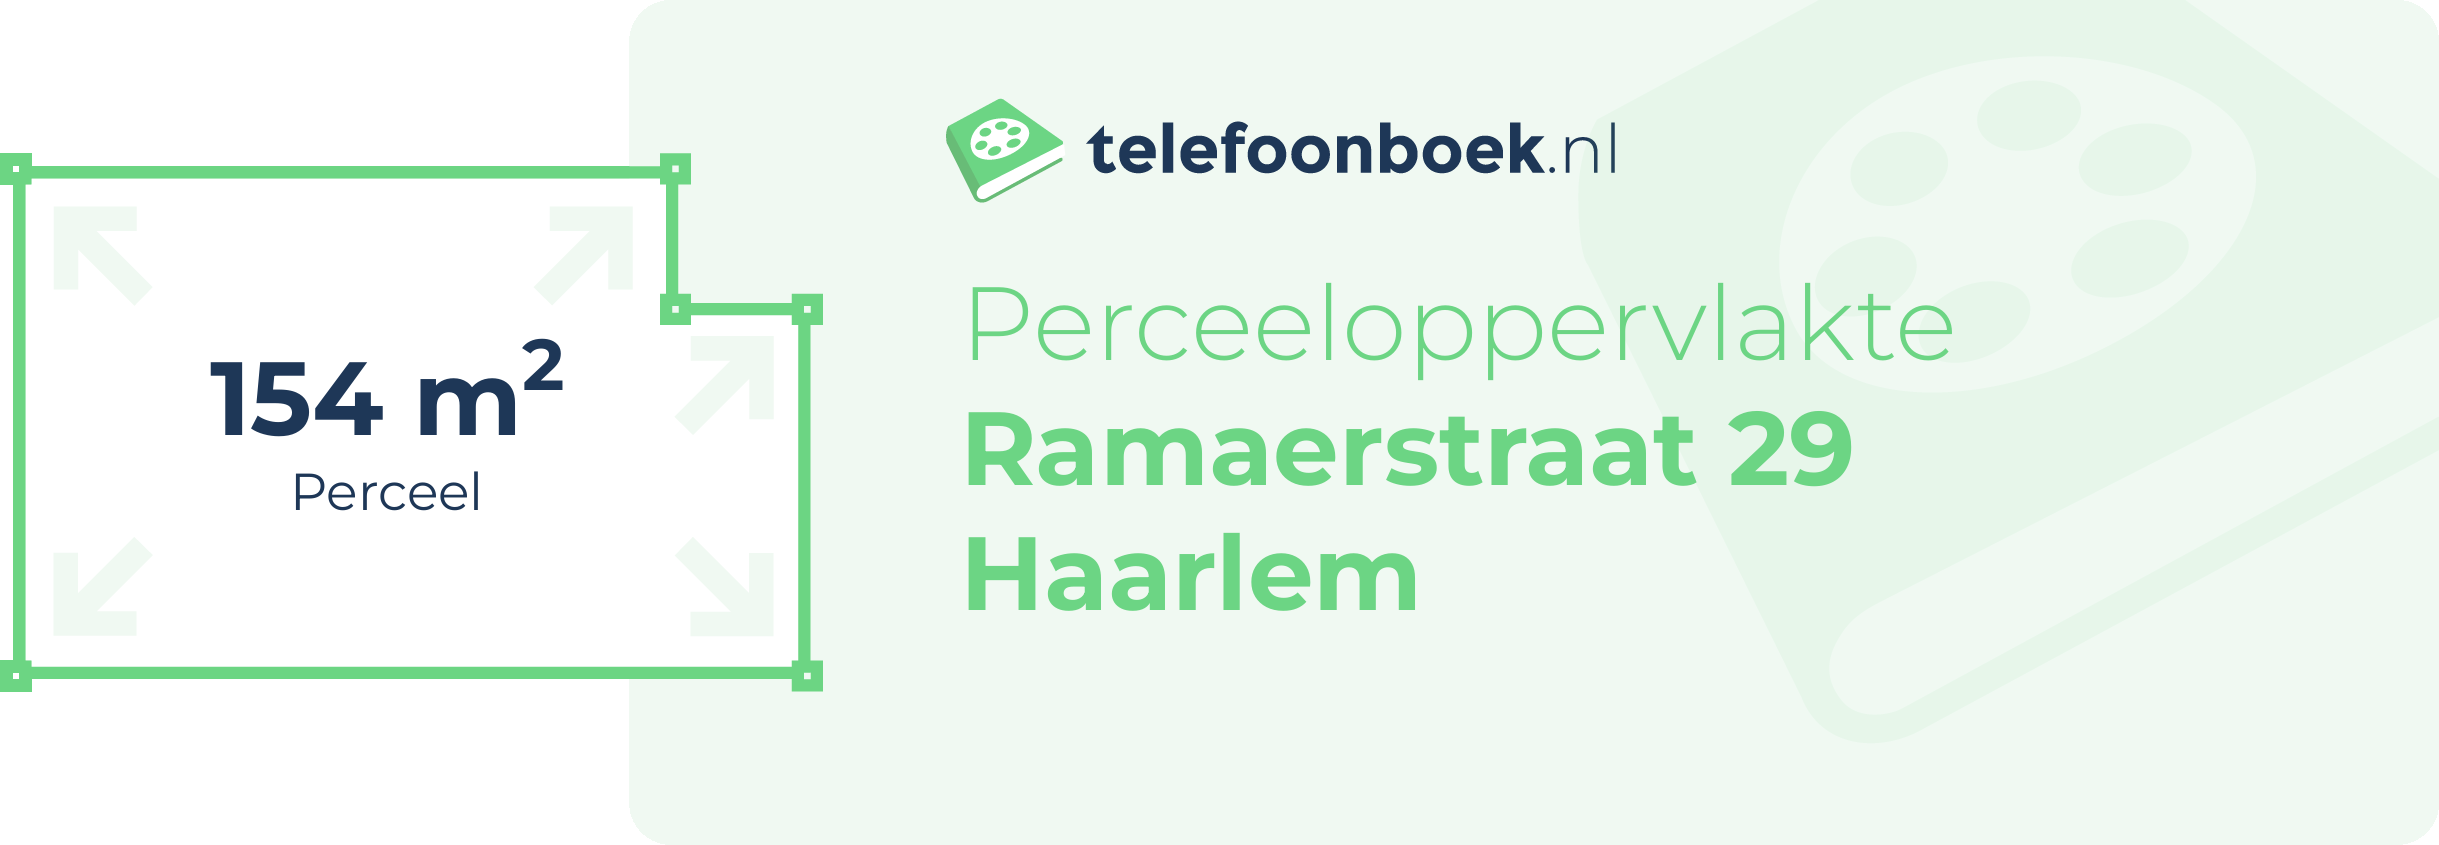 Perceeloppervlakte Ramaerstraat 29 Haarlem